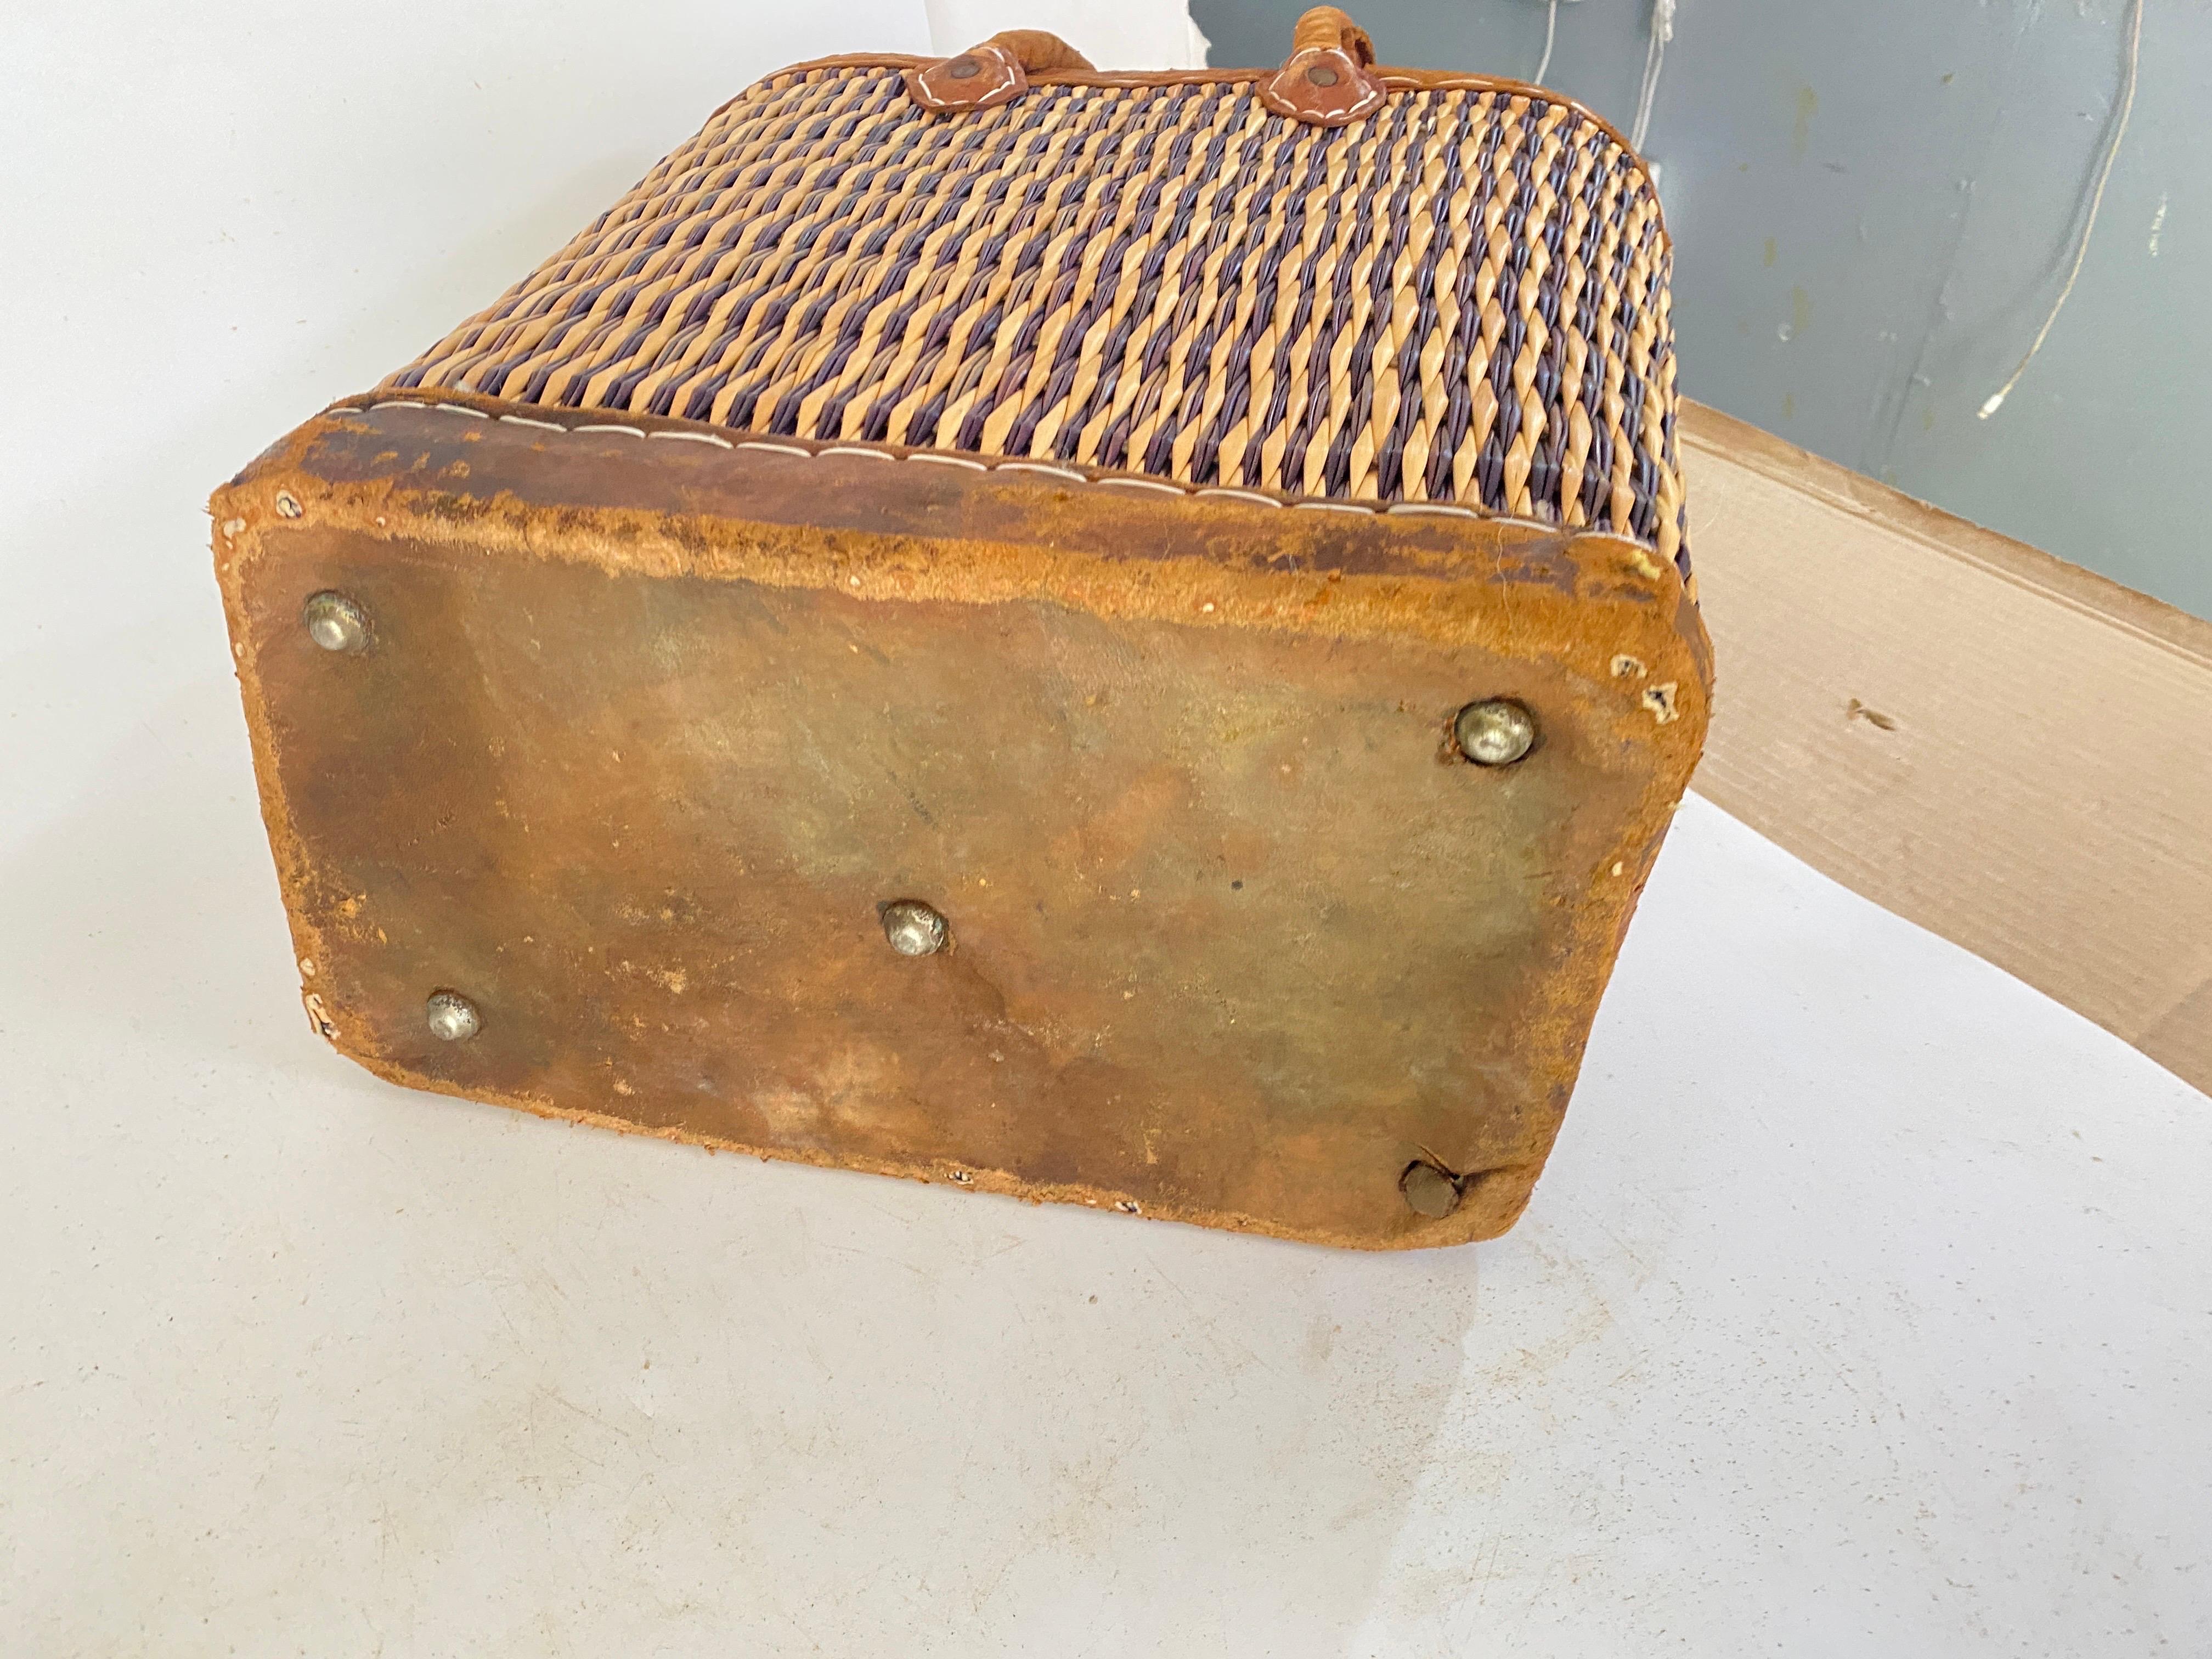 Vintage French Wicker Basket, Gold Color Stitched Leather Bag Handles France For Sale 4